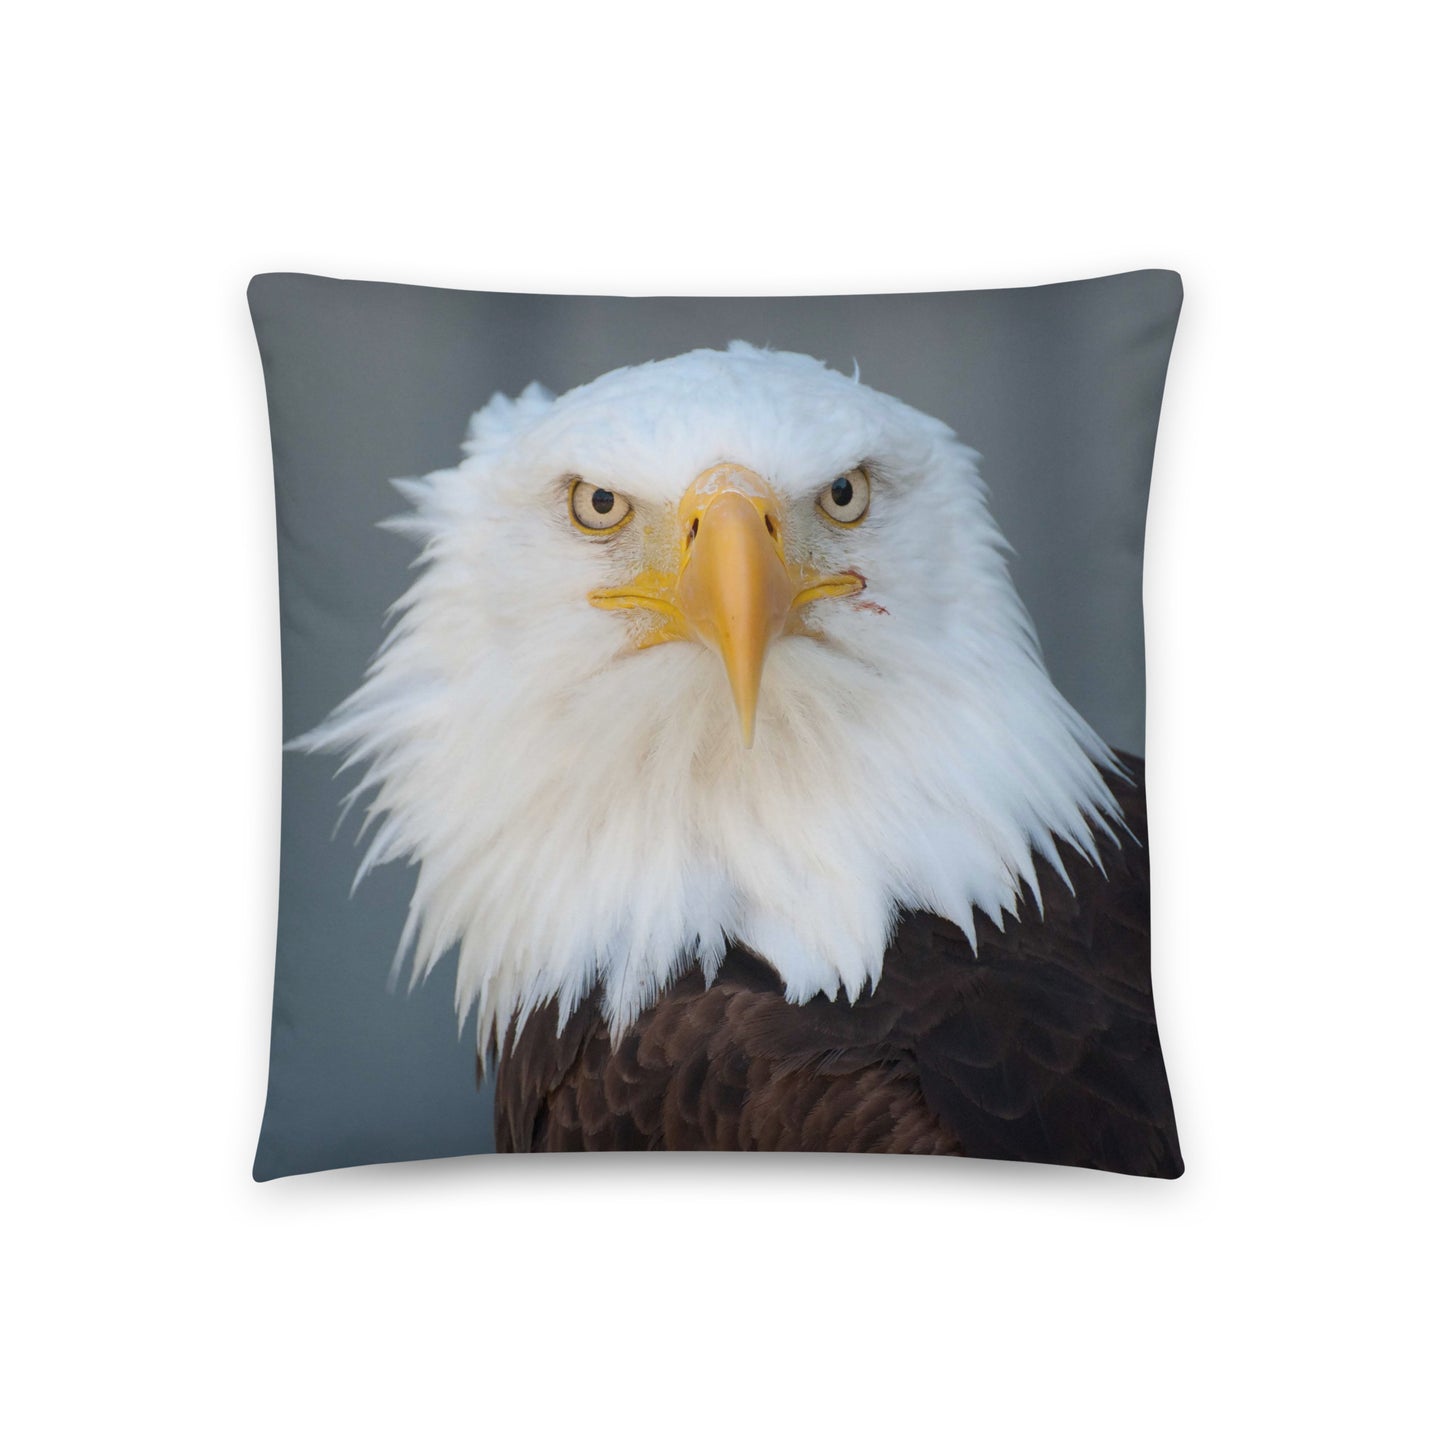 Throw Pillow with a Bald Eagle Print